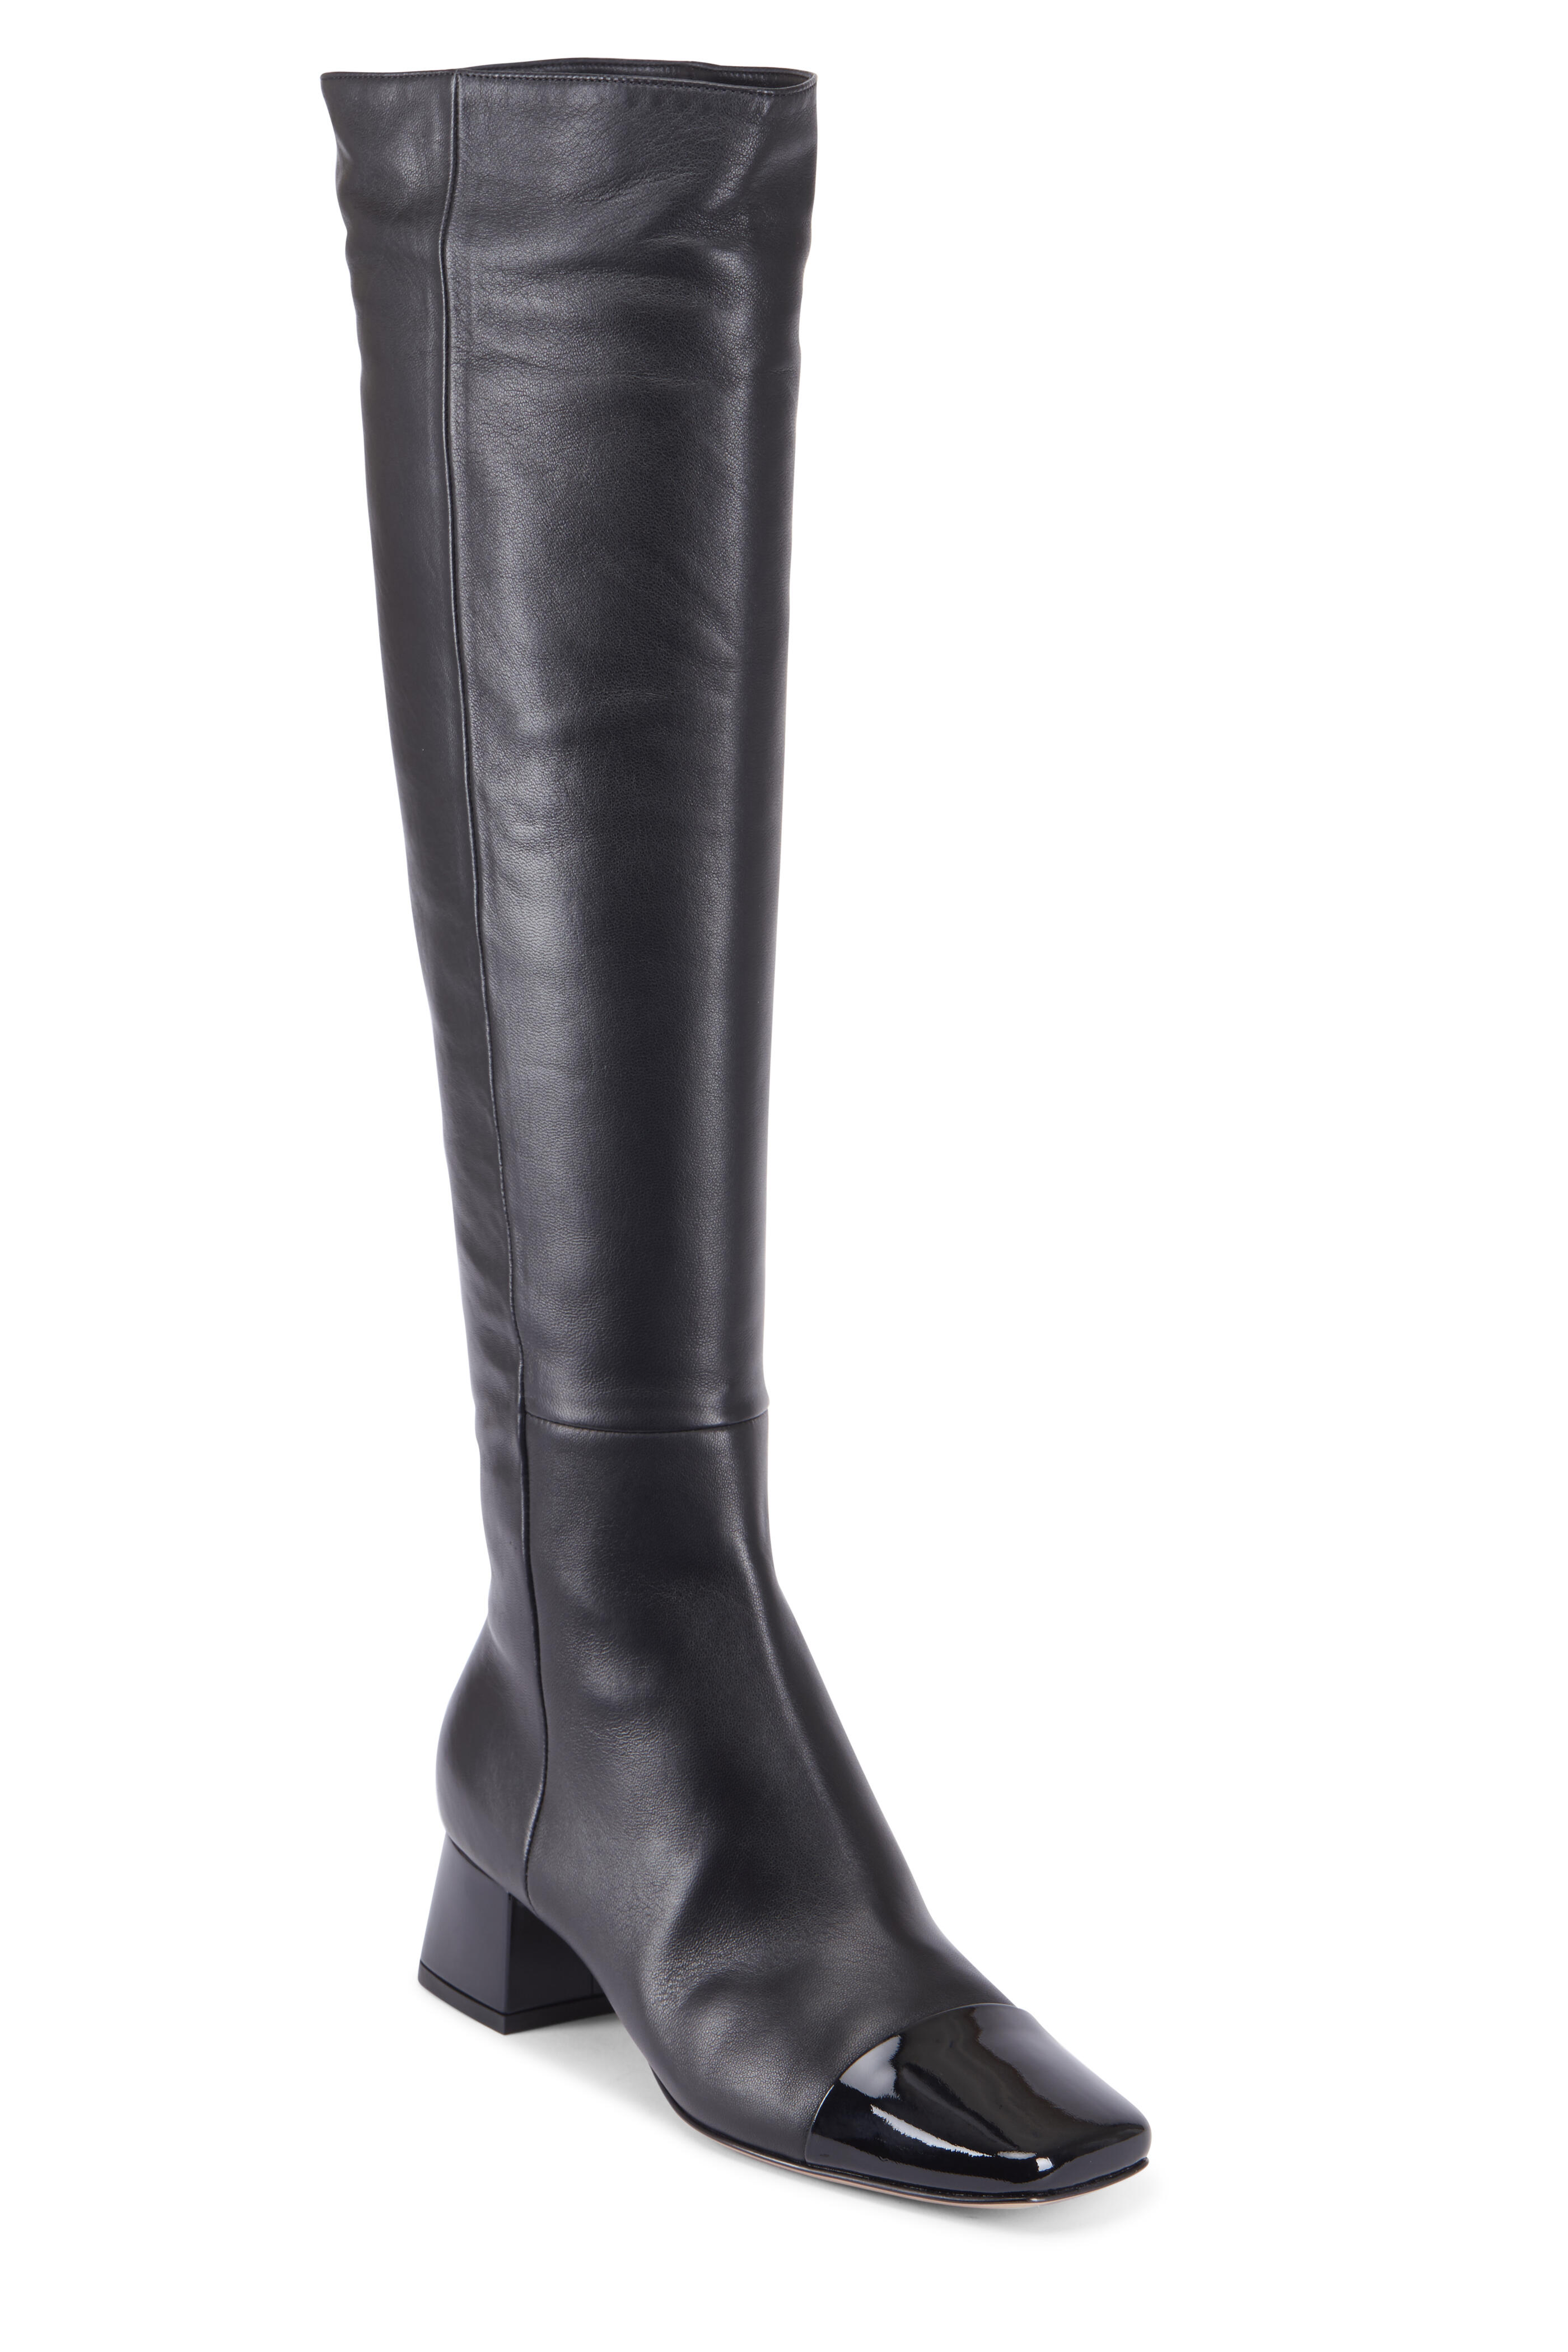 Gianvito Rossi - Vernice Black Leather Cap-Toe High Boot, 45mm